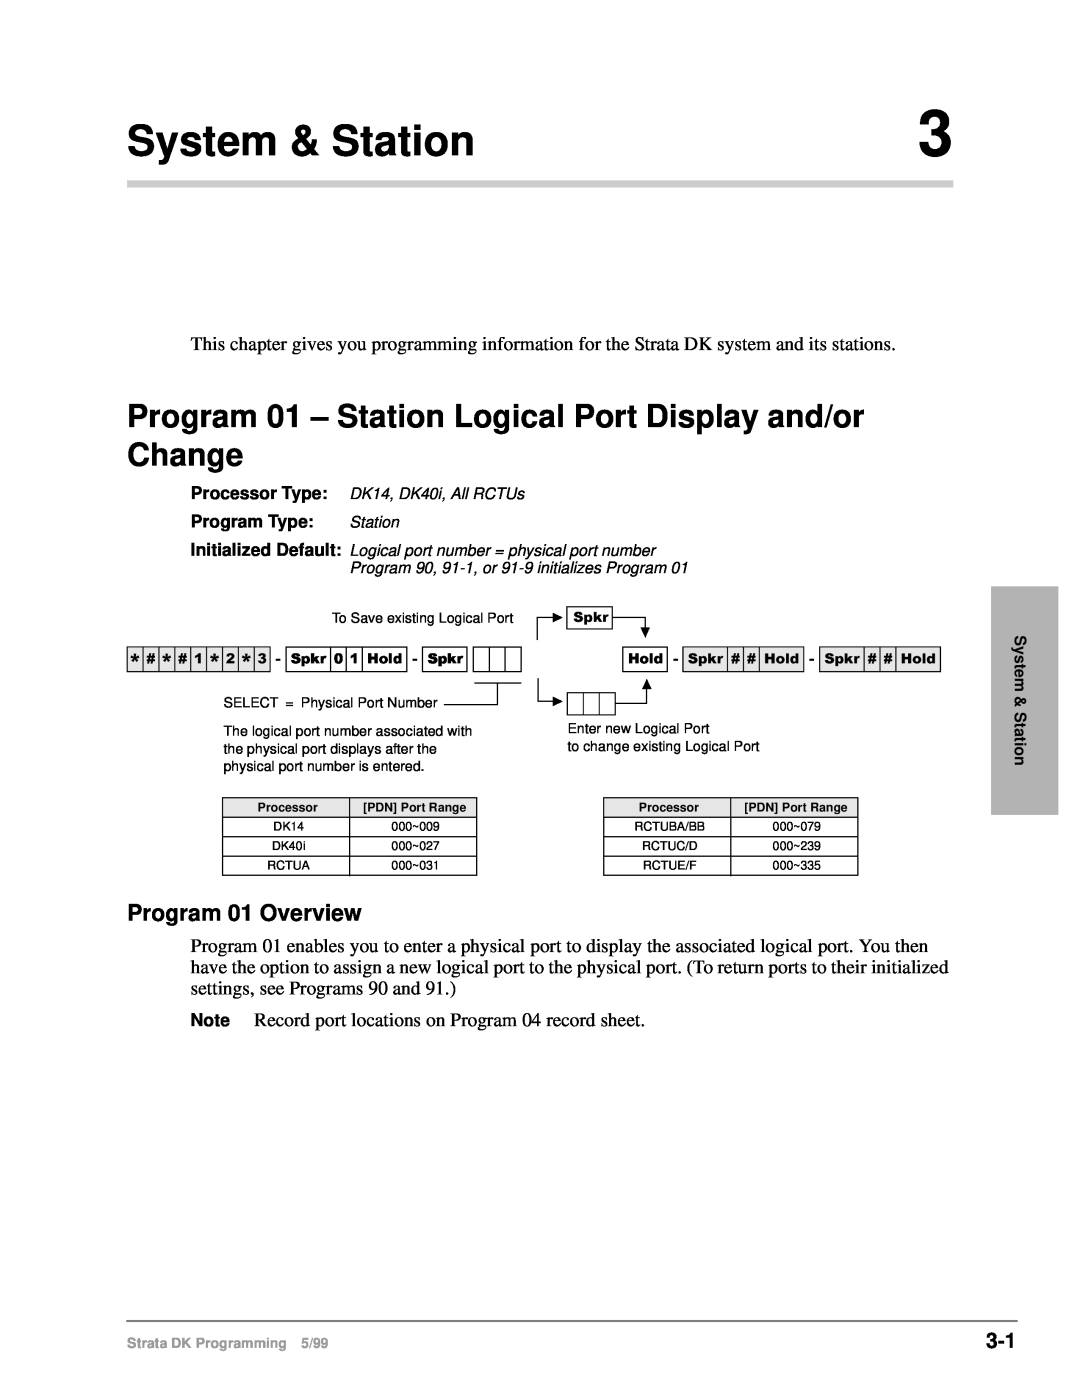 Toshiba dk14 manual System & Station, Program 01 Overview 